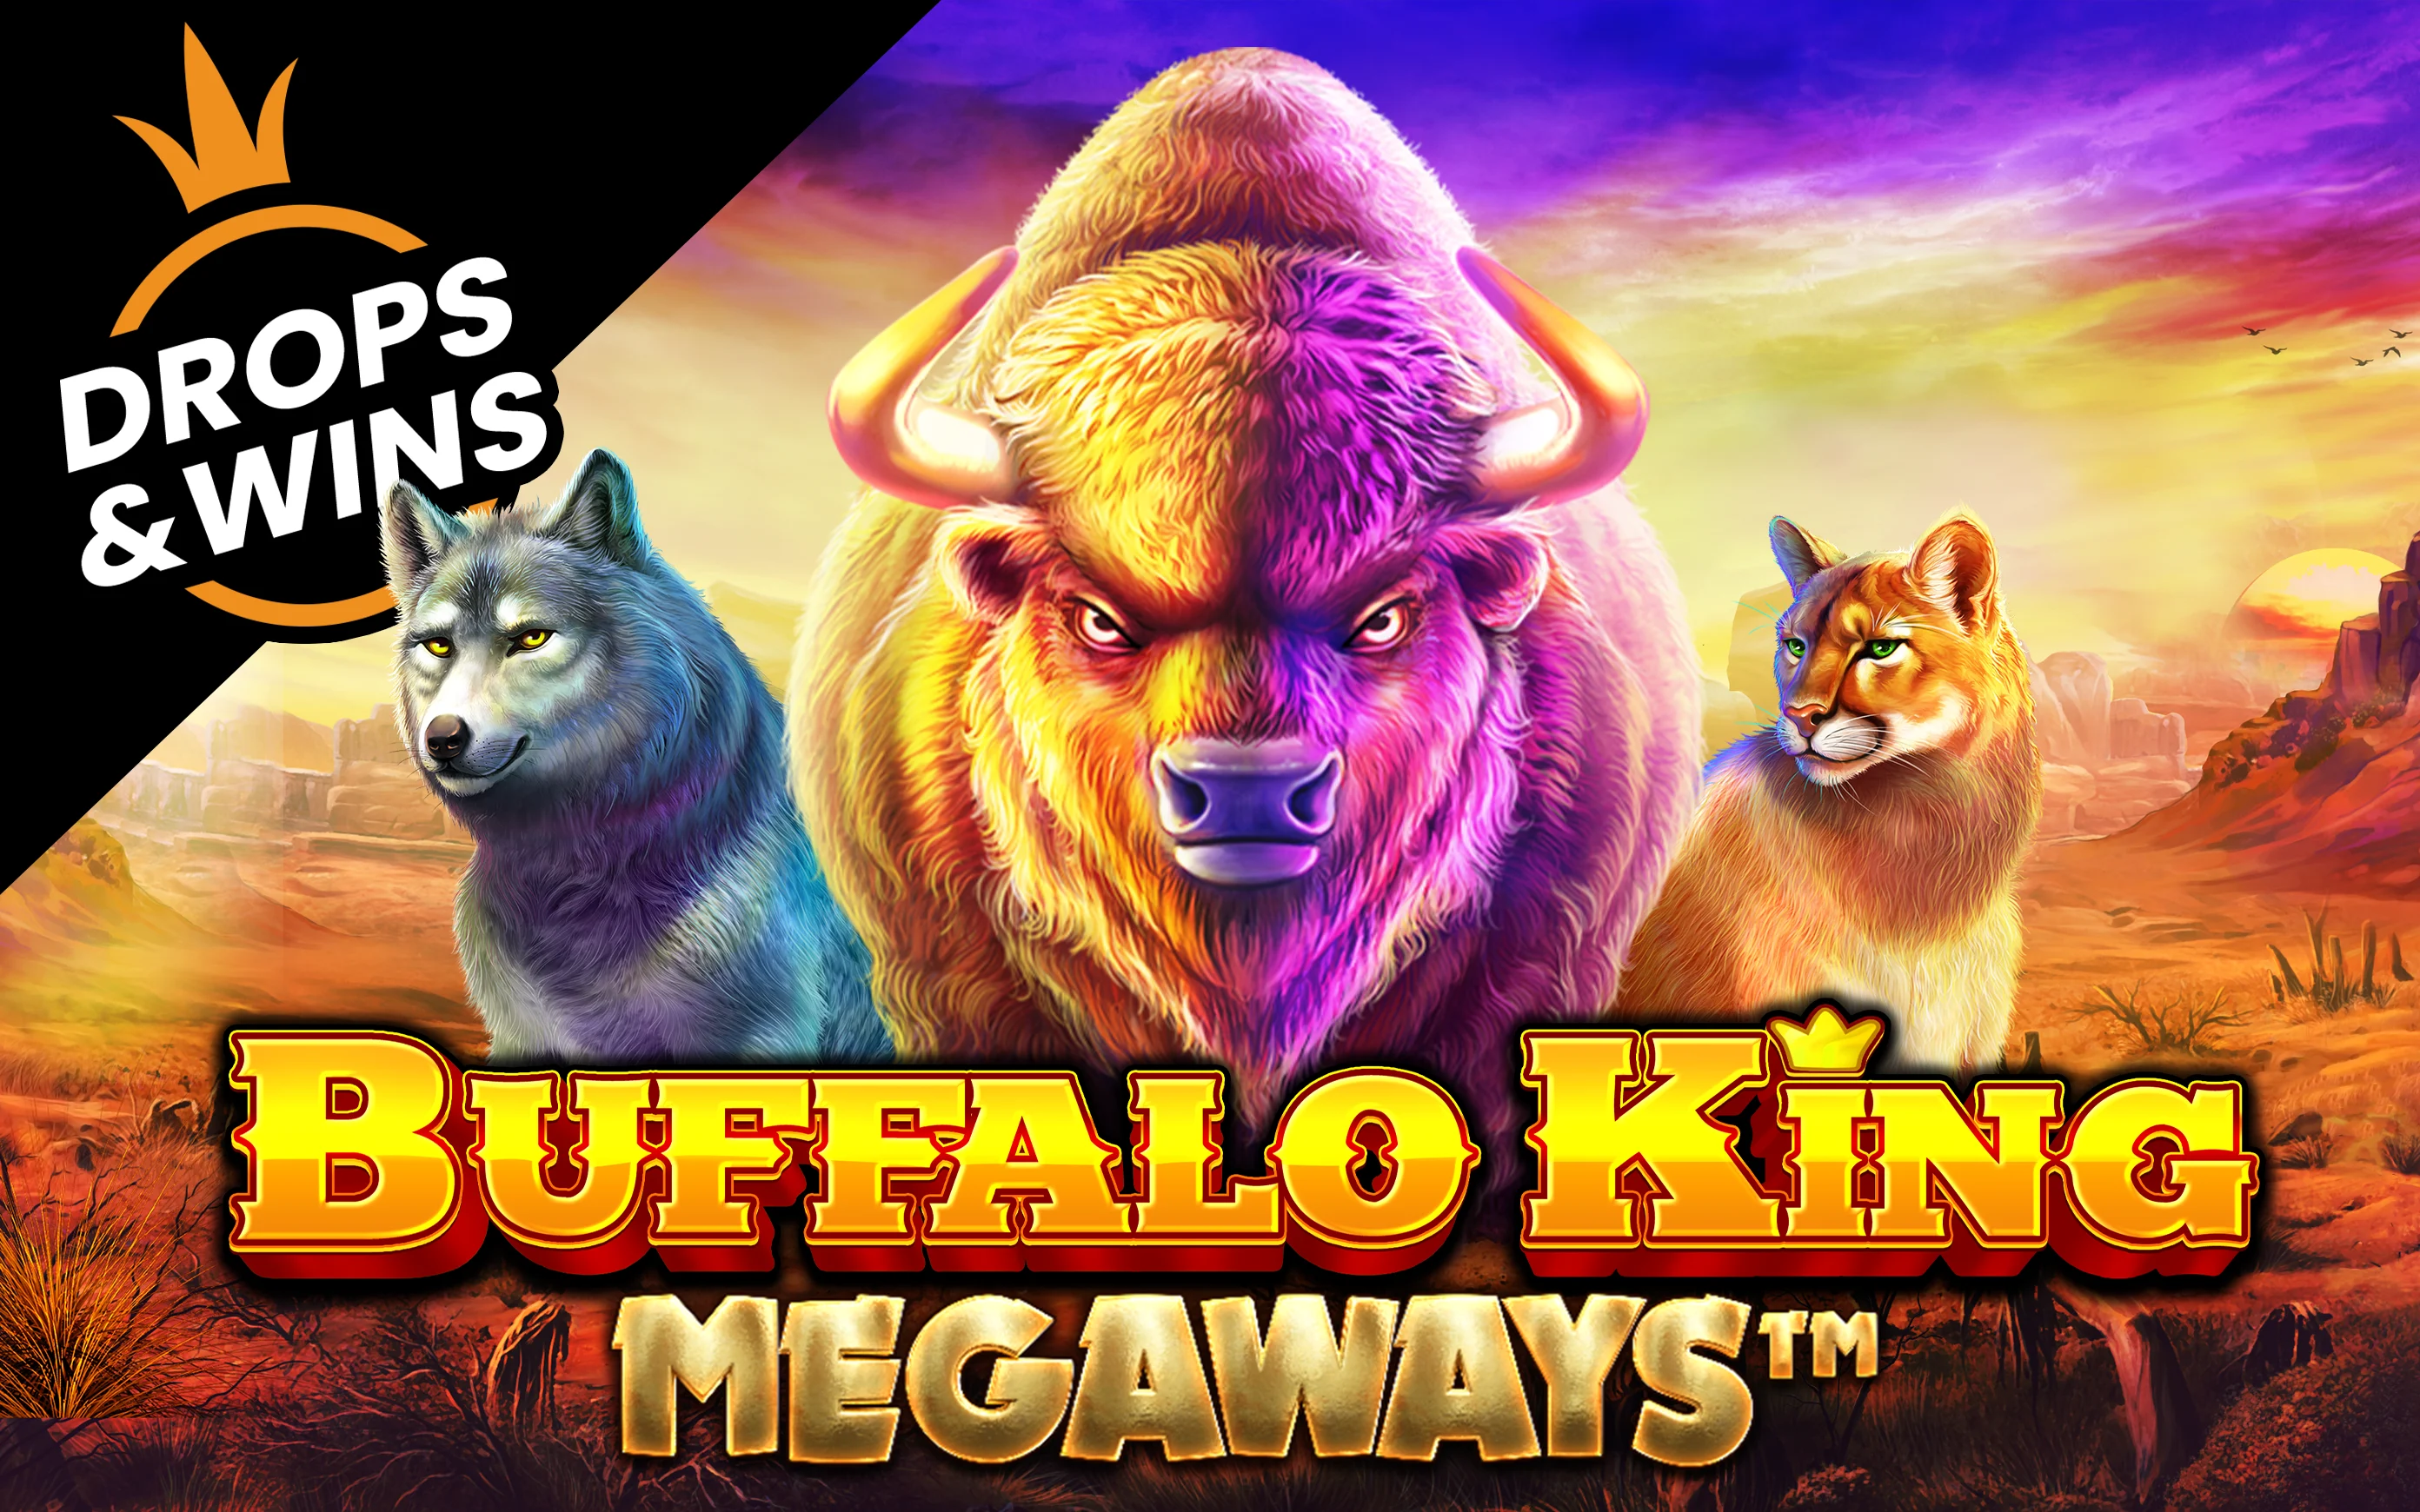 Joacă Buffalo King Megaways™ în cazinoul online Starcasino.be